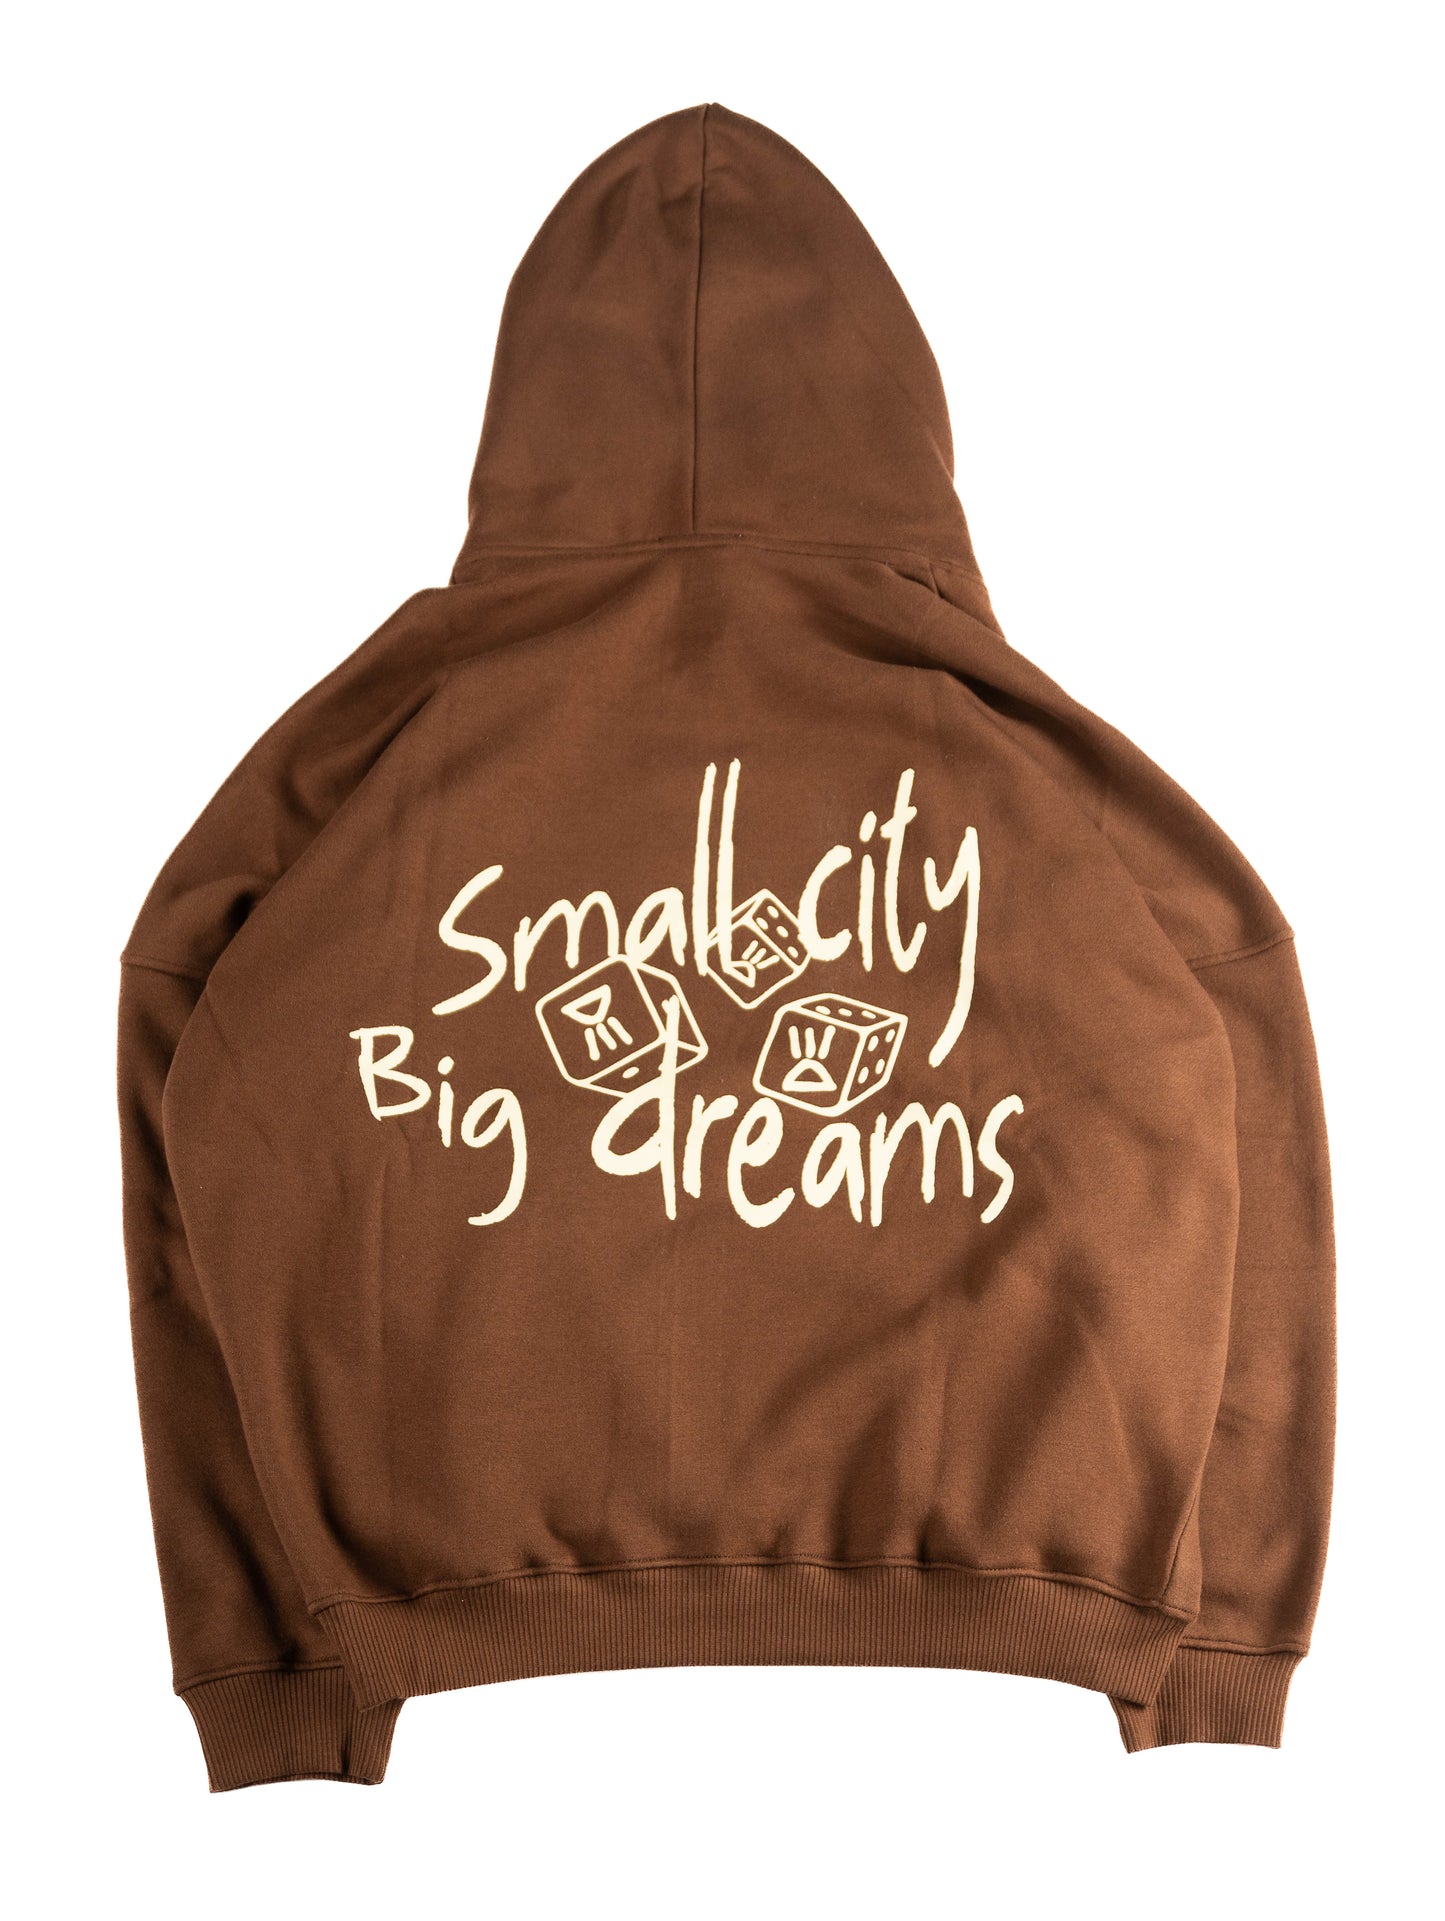 Mocha small city big dreams hoodie